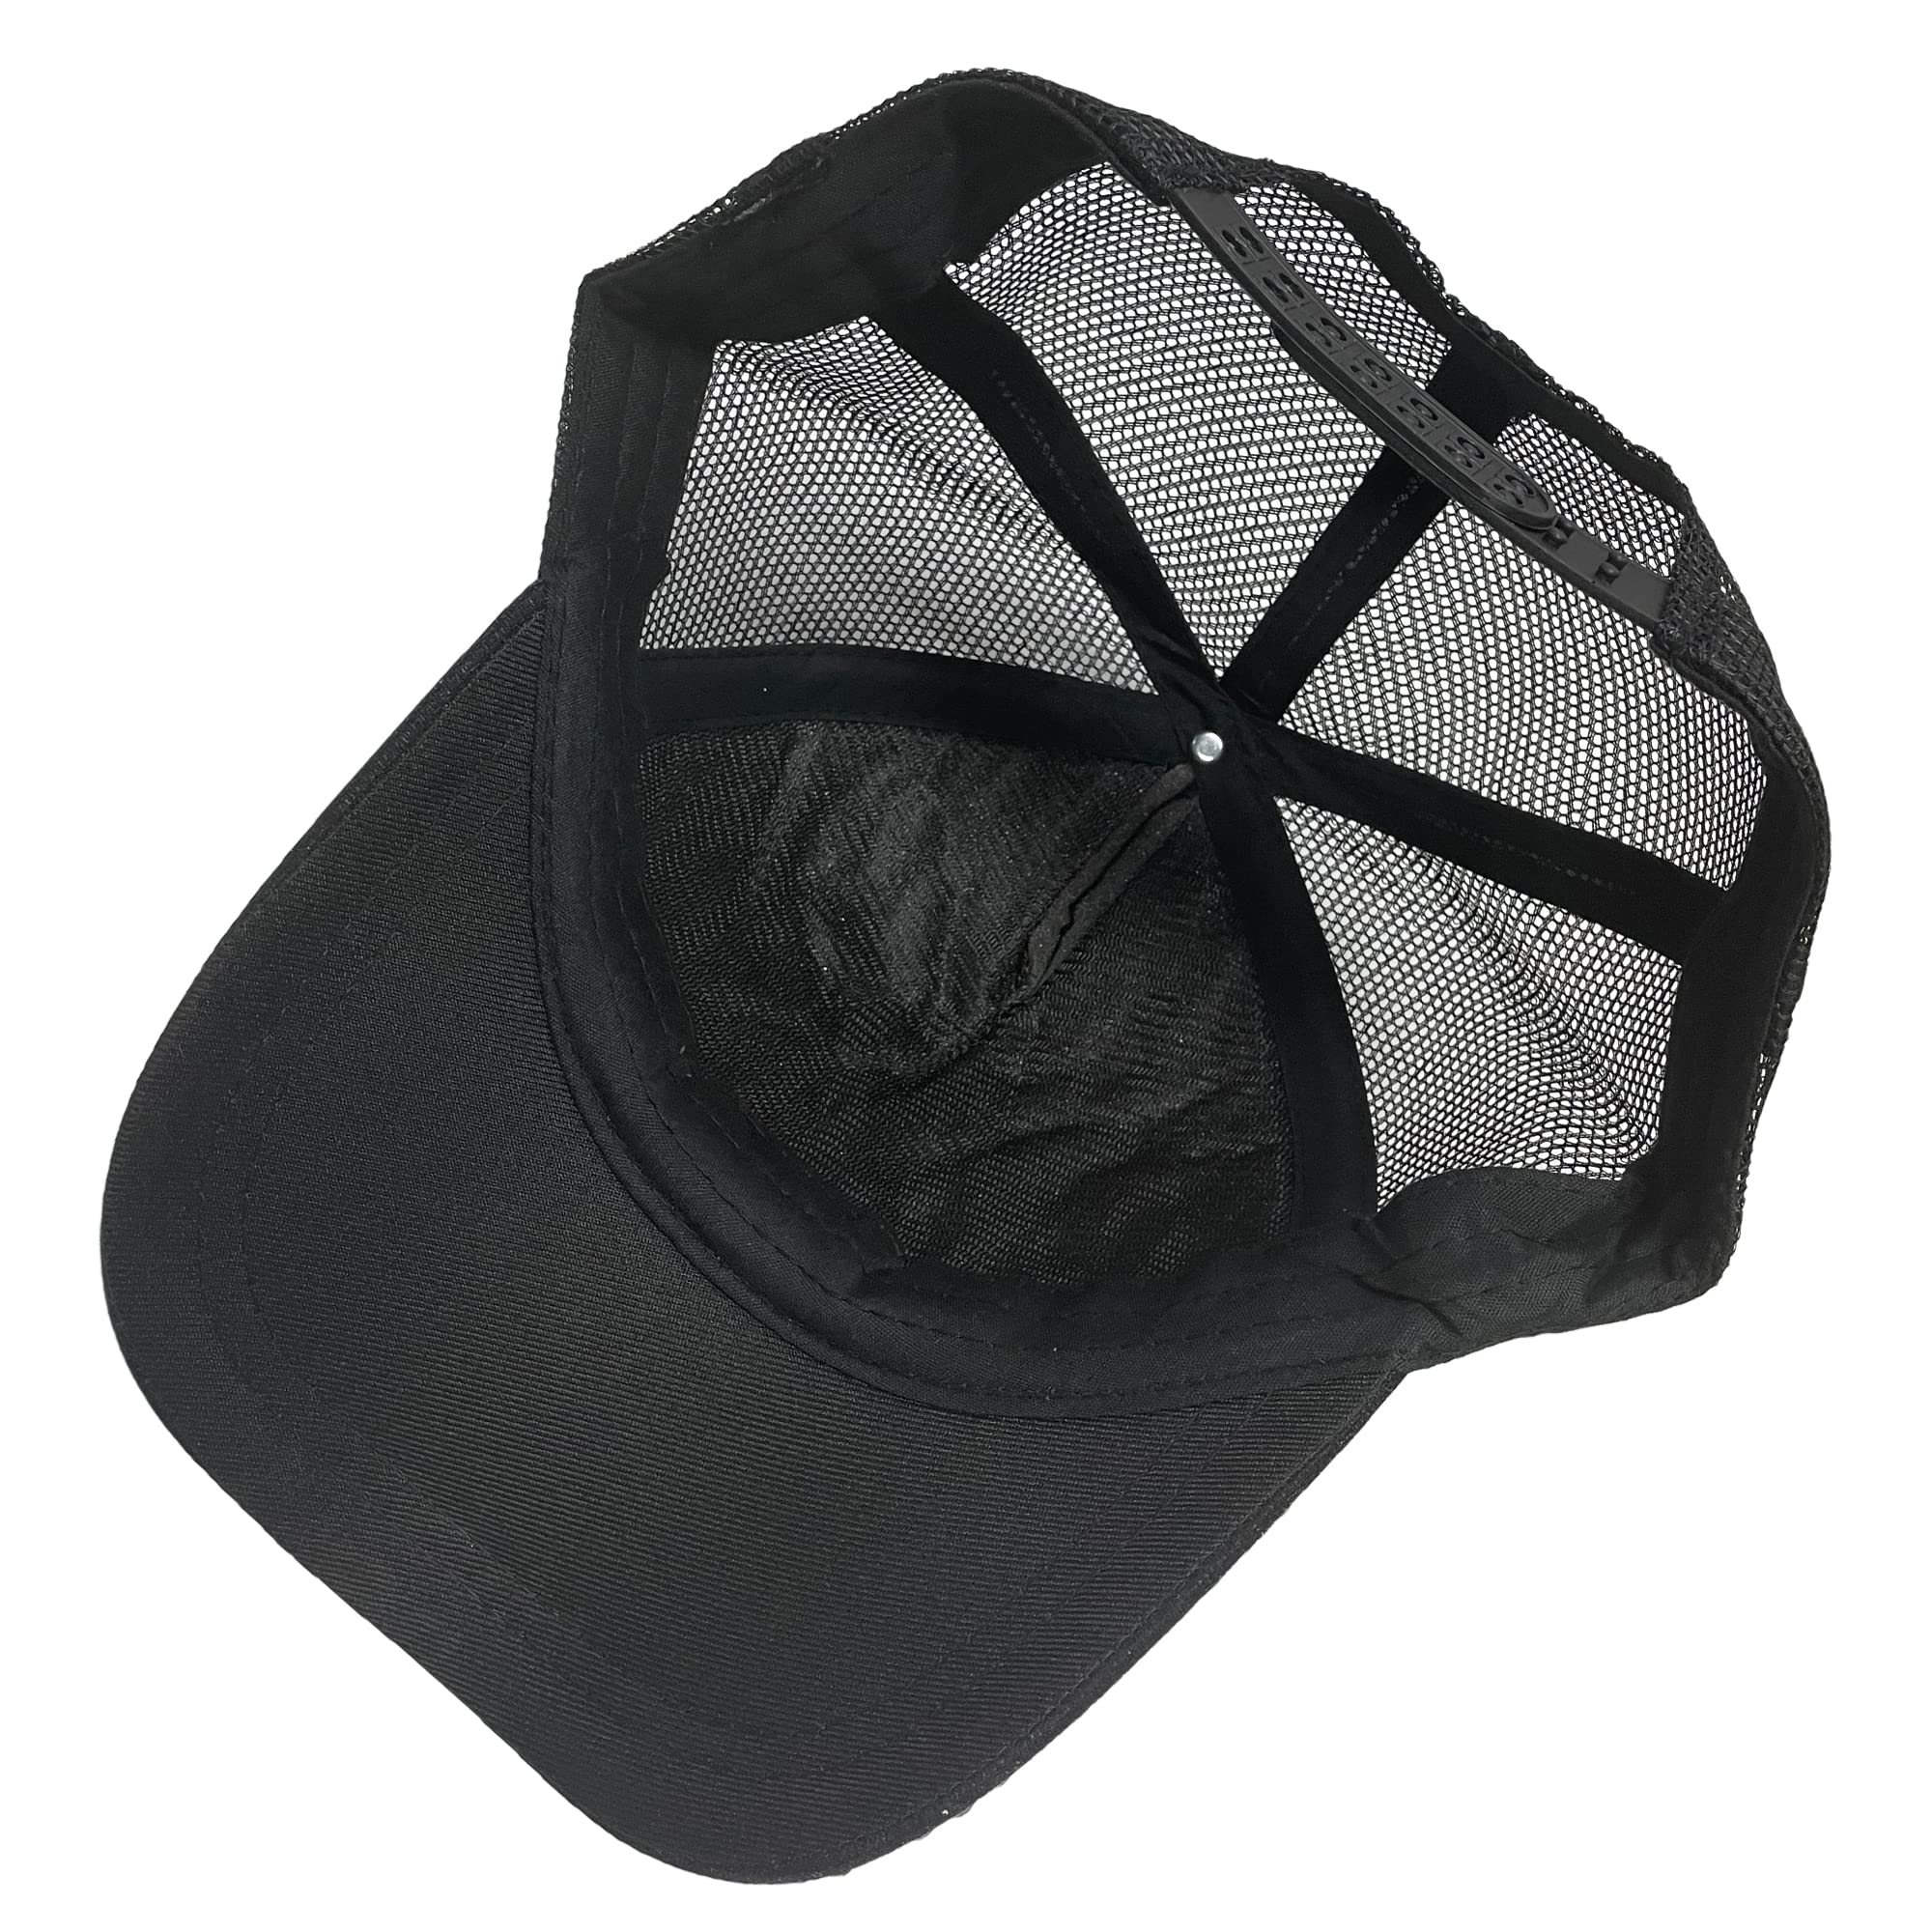 Studded Rhinestone Baseball Cap Adjustable Sparkle Mesh Sun Hat - Black White